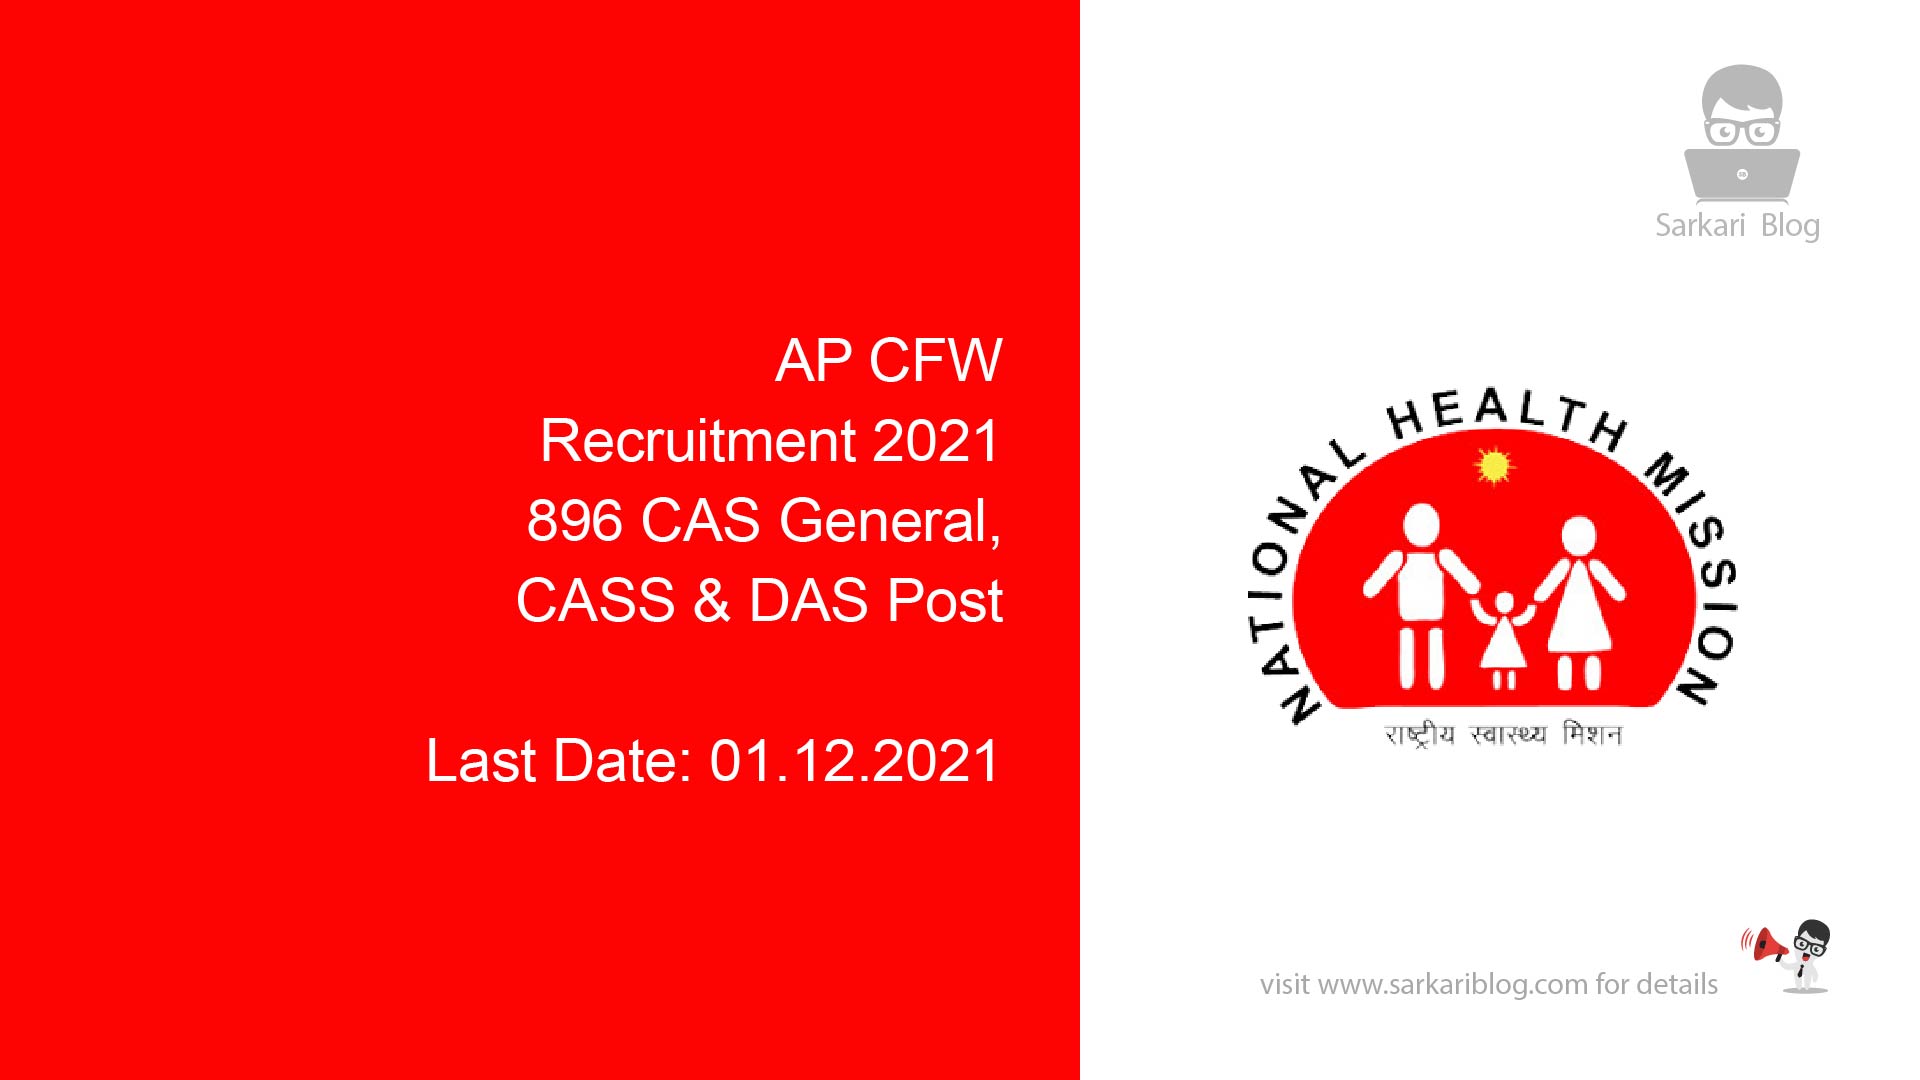 AP CFW Recruitment 2021